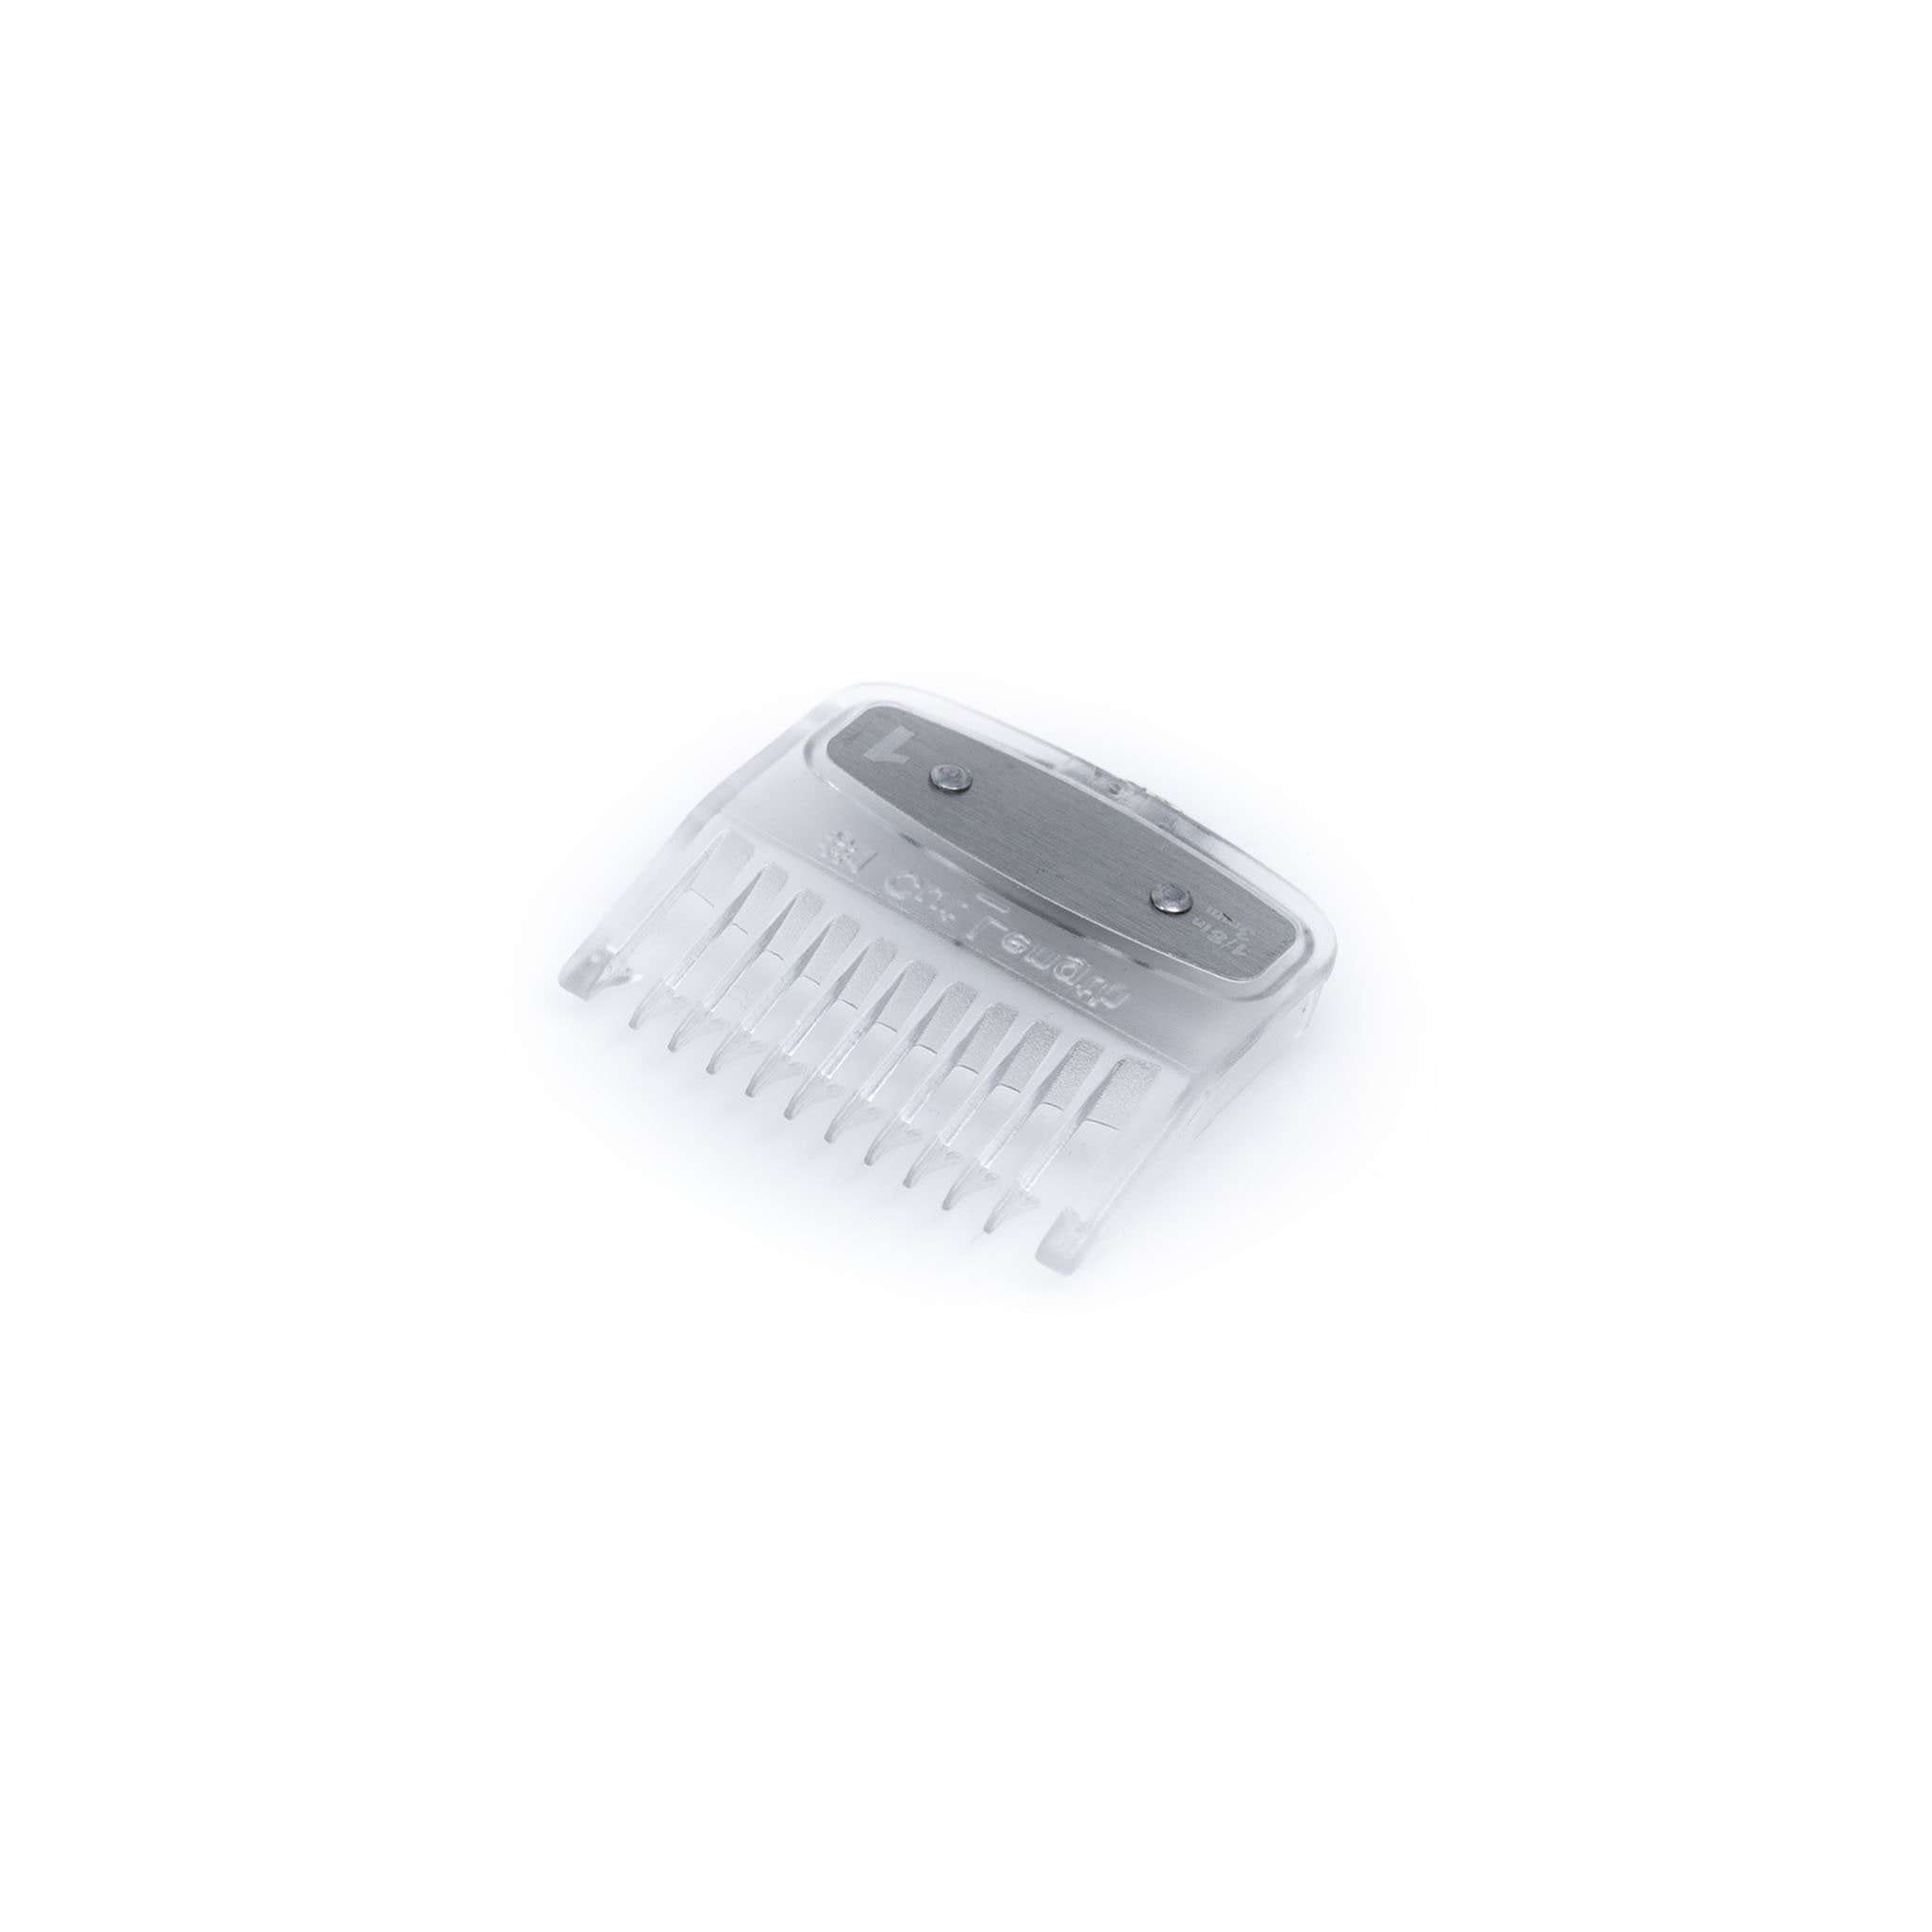 Transparent Series - Clear Premium Guard Comb Set - ShopKeep Supply